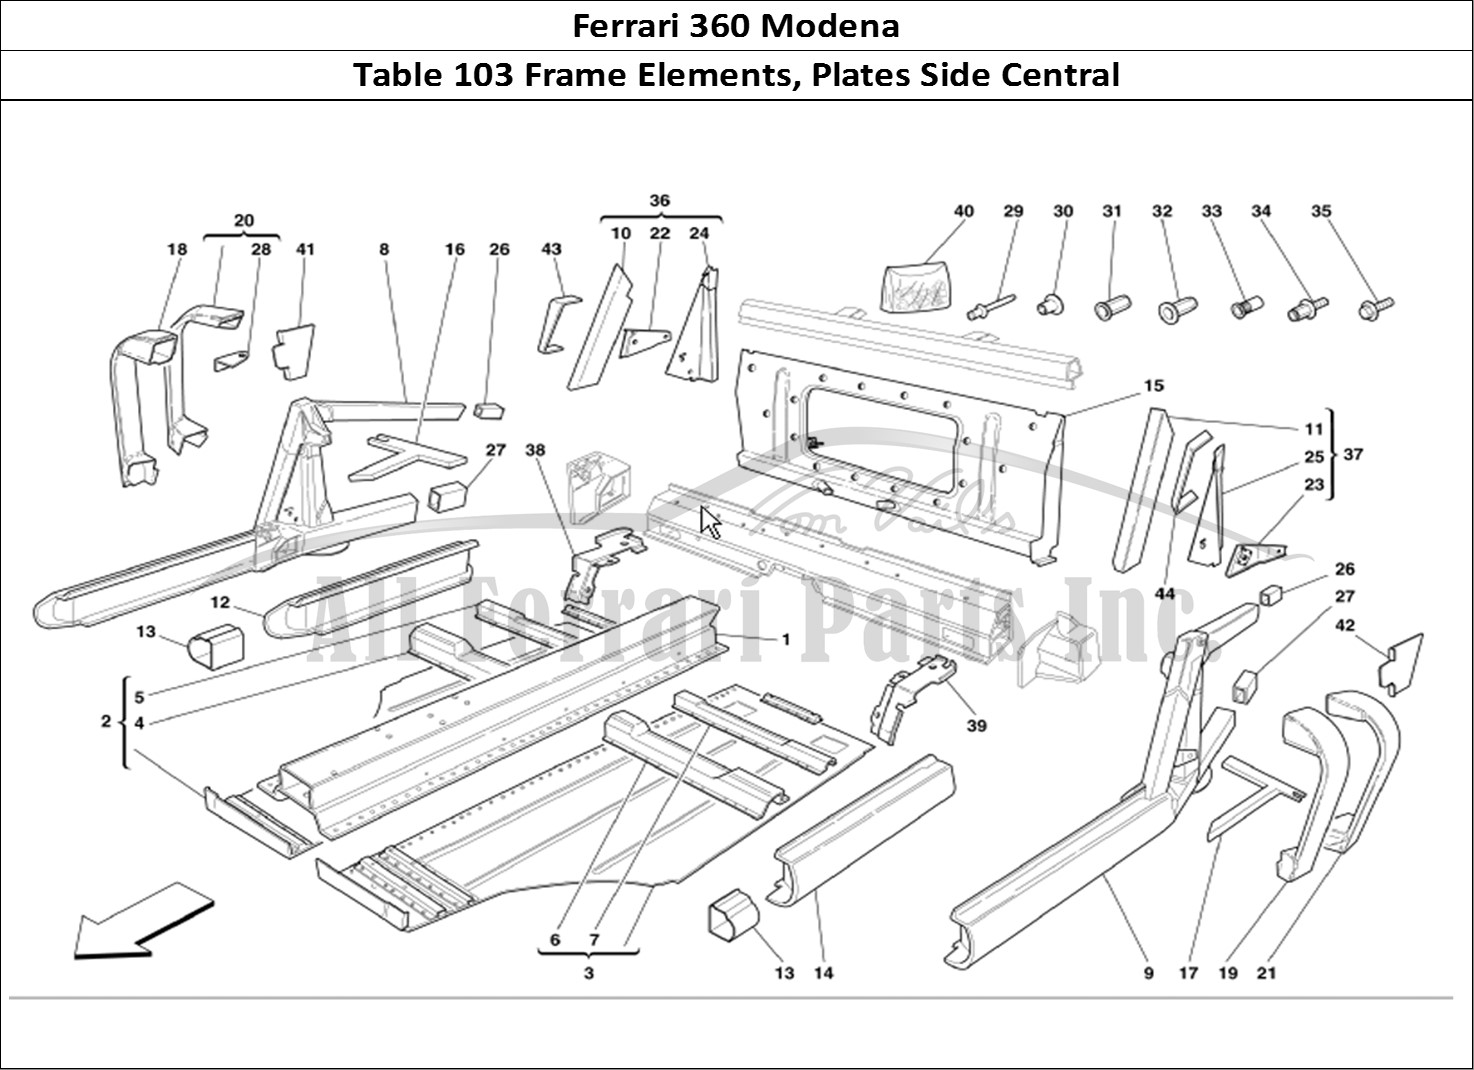 Ferrari Parts Ferrari 360 Modena Page 103 Central Side Elements and